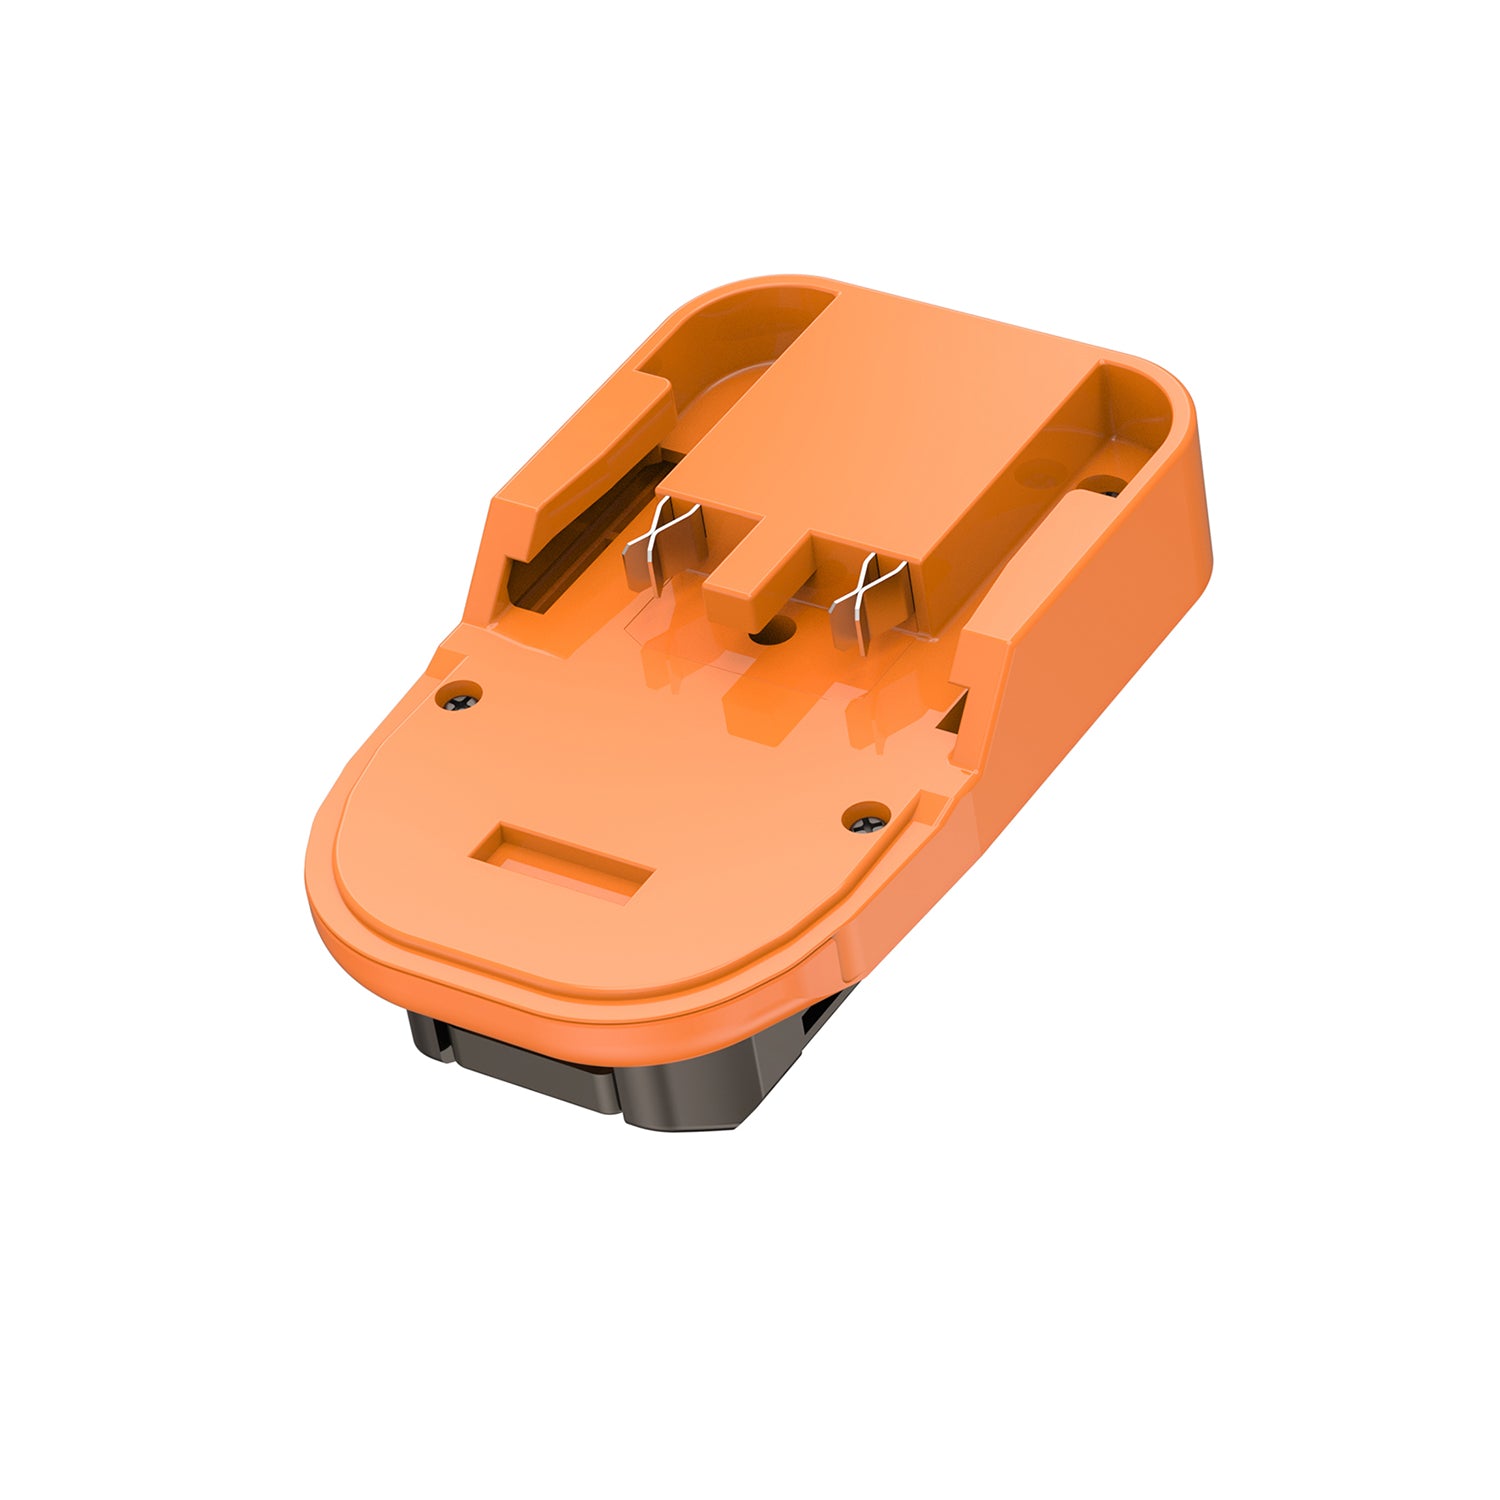 Battery Adapter For Black&Decker 18V Li-ion Battery Convert To